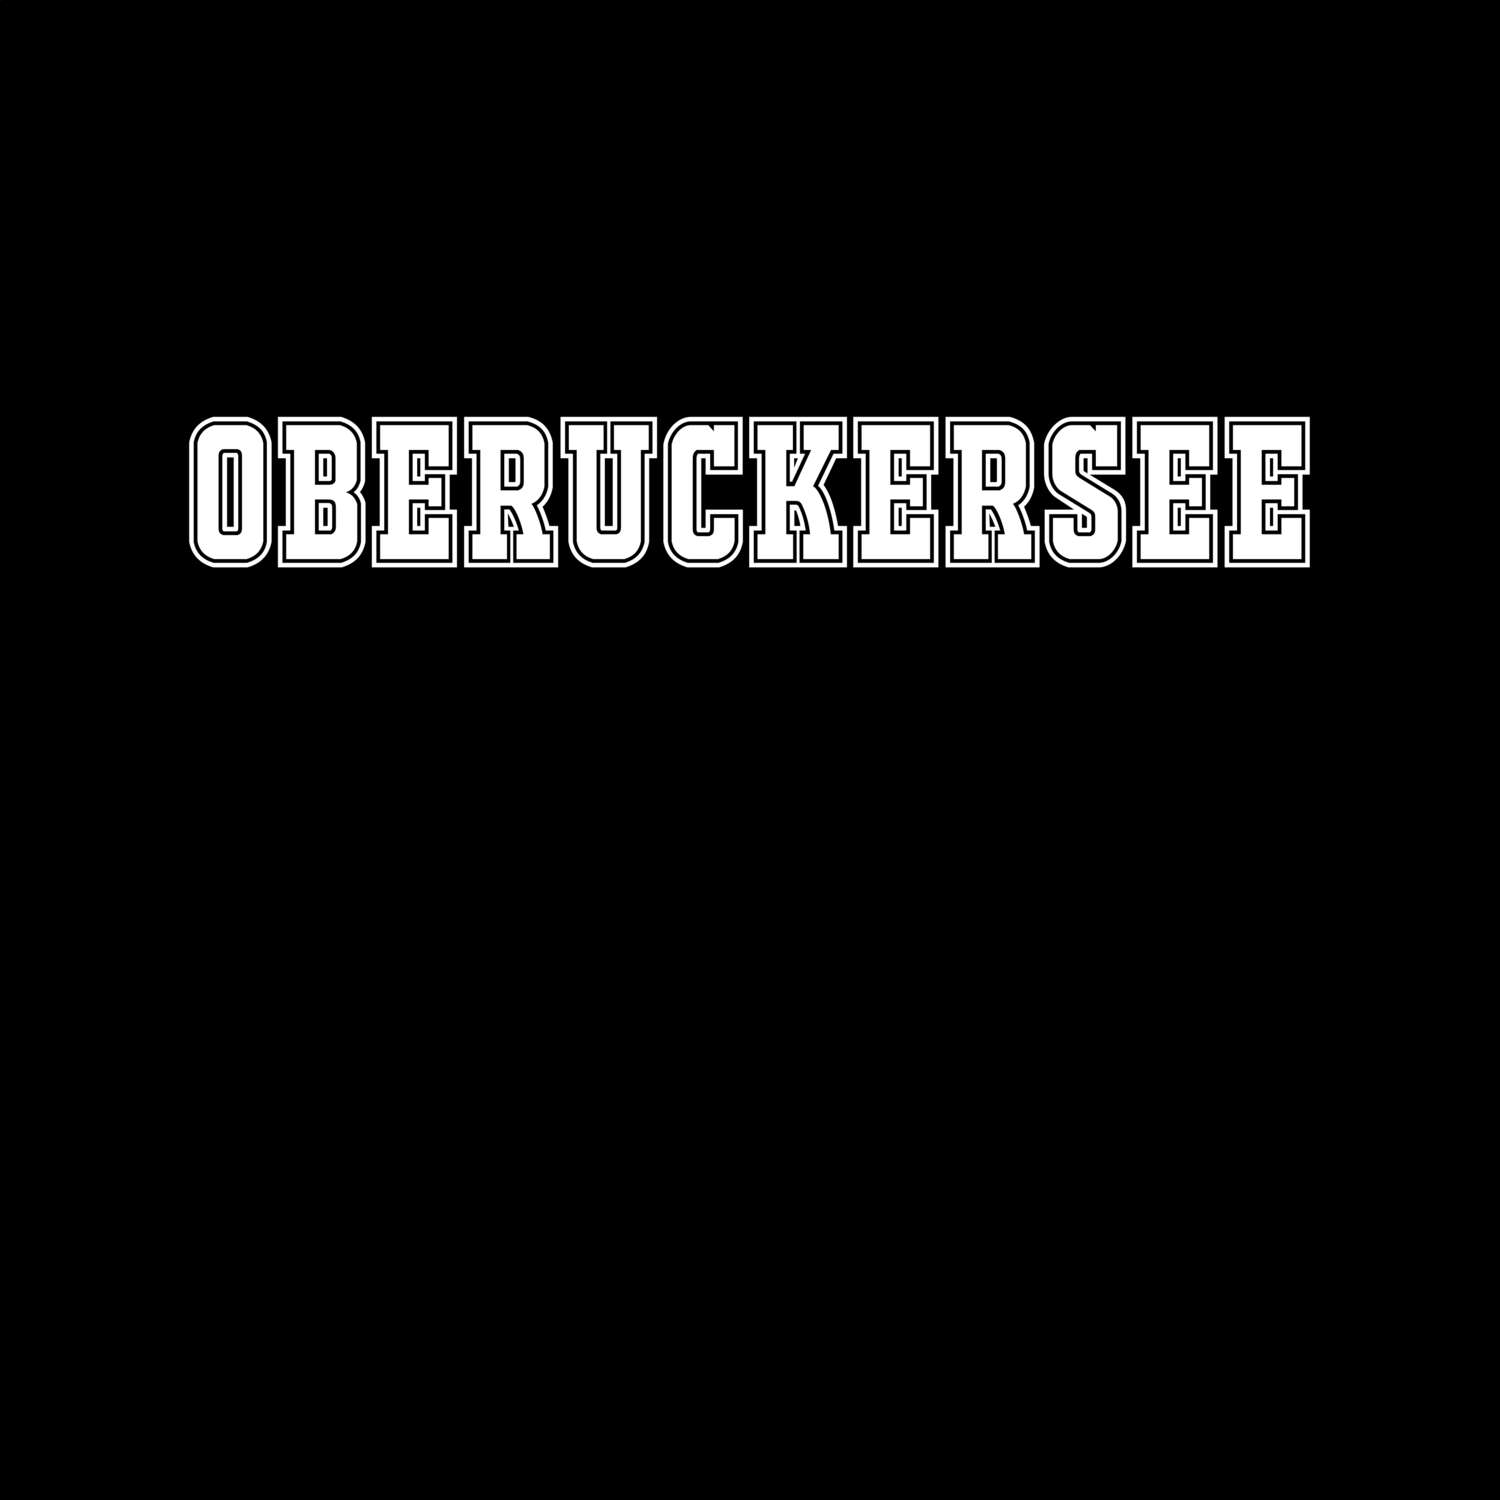 Oberuckersee T-Shirt »Classic«